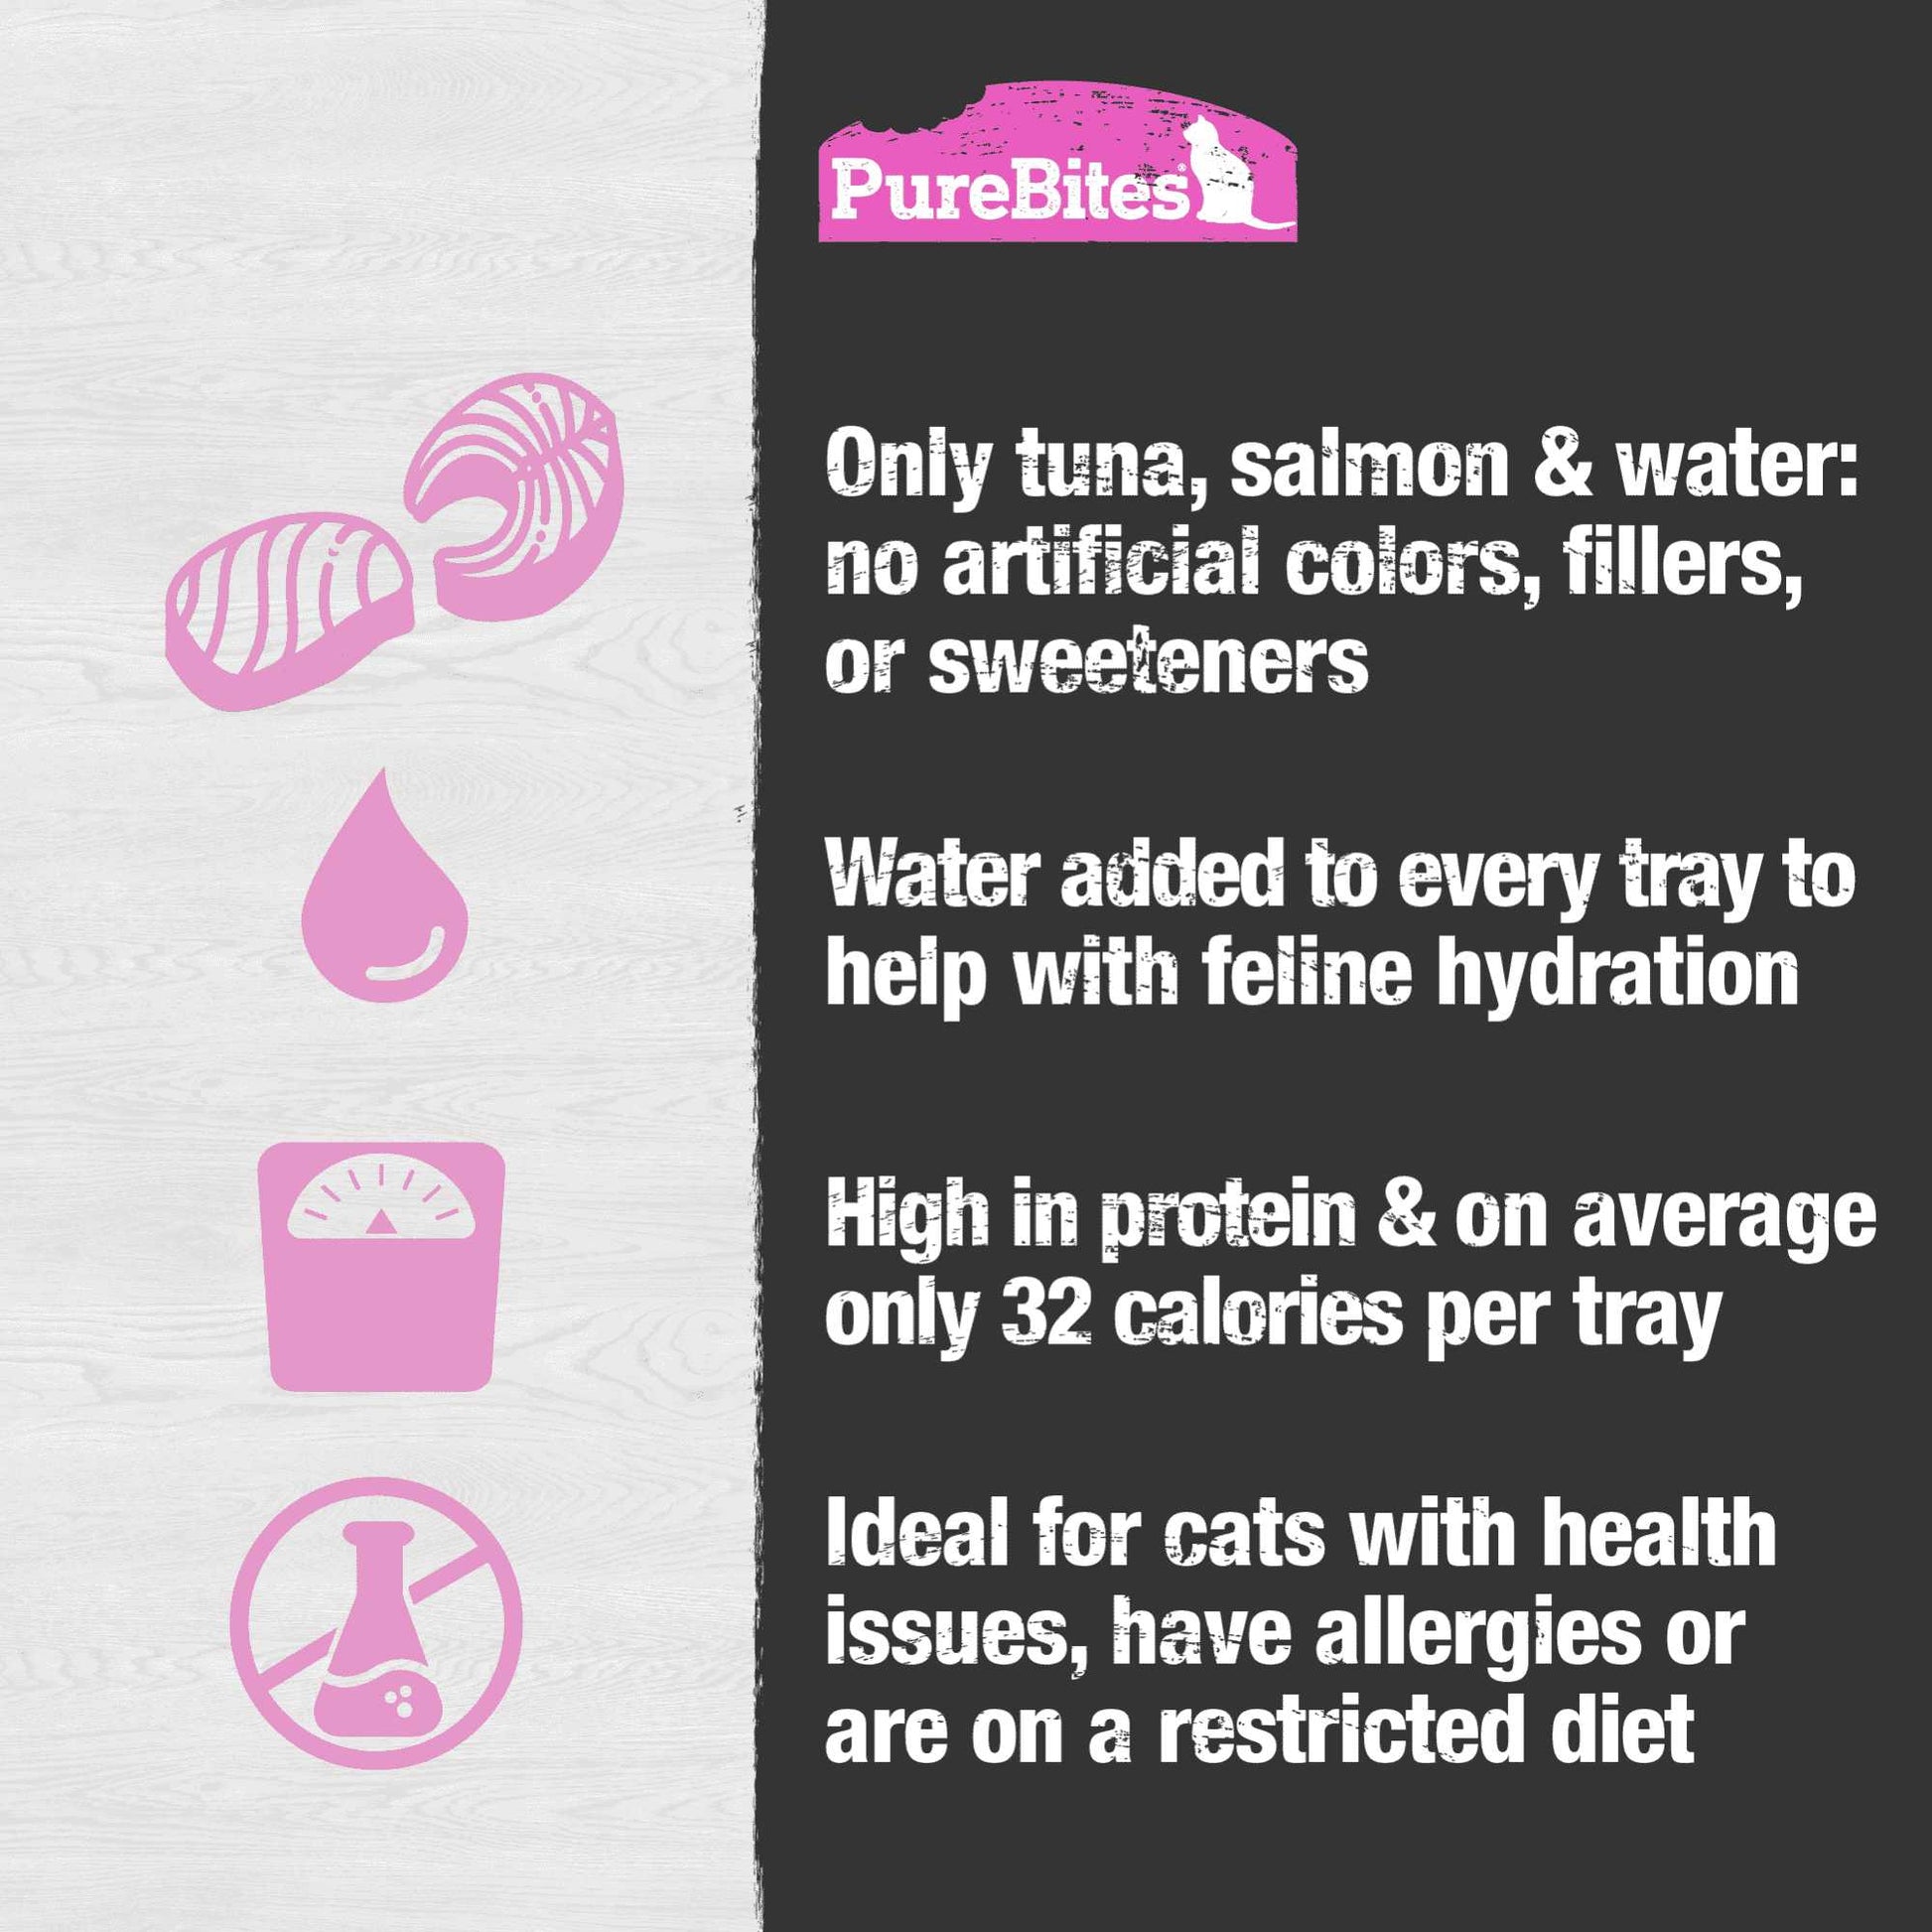 PureBites Mixers Wild Skipjack Tuna & Wild Alaskan Salmon in Water Cat Food Pure Treats